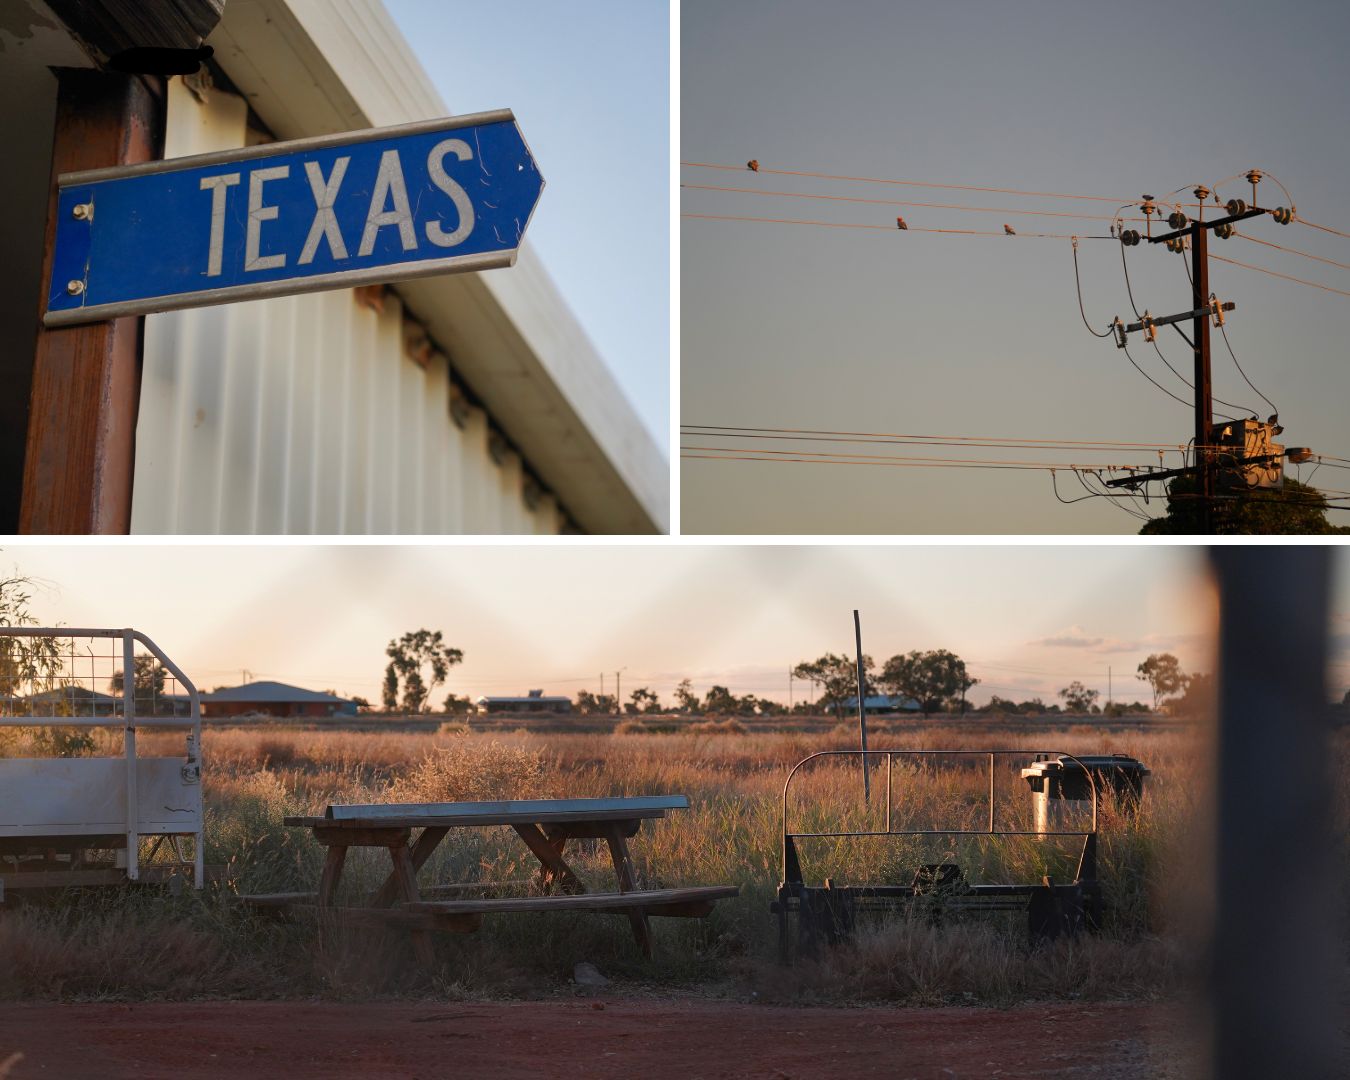 Texas street sign, birds on wire, sunset over grass